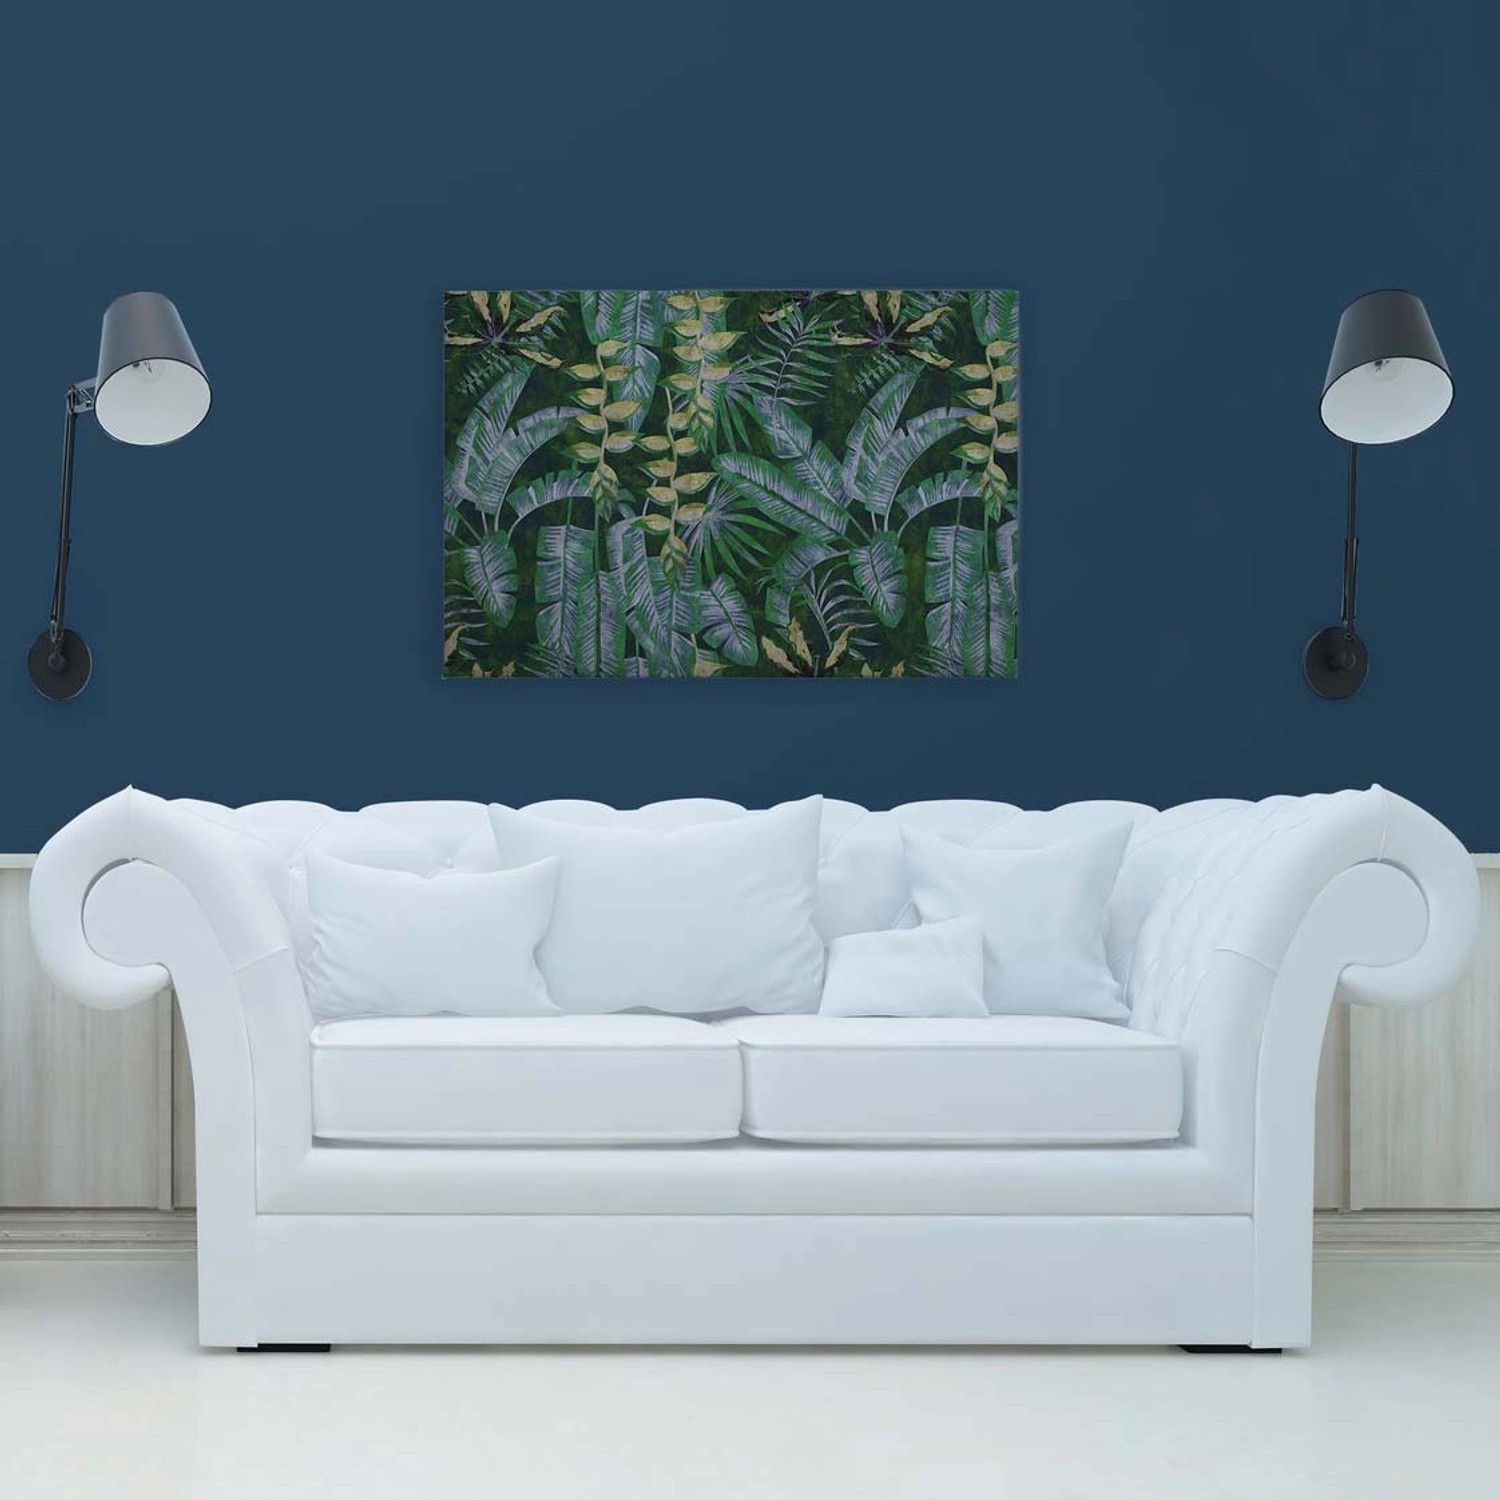 Bricoflor Bild Tropischer Regenwald Dunkelgrün Deko Wandbild Bananenblätter Für Wohnzimmer Leinwandbild Palmenblätter 12